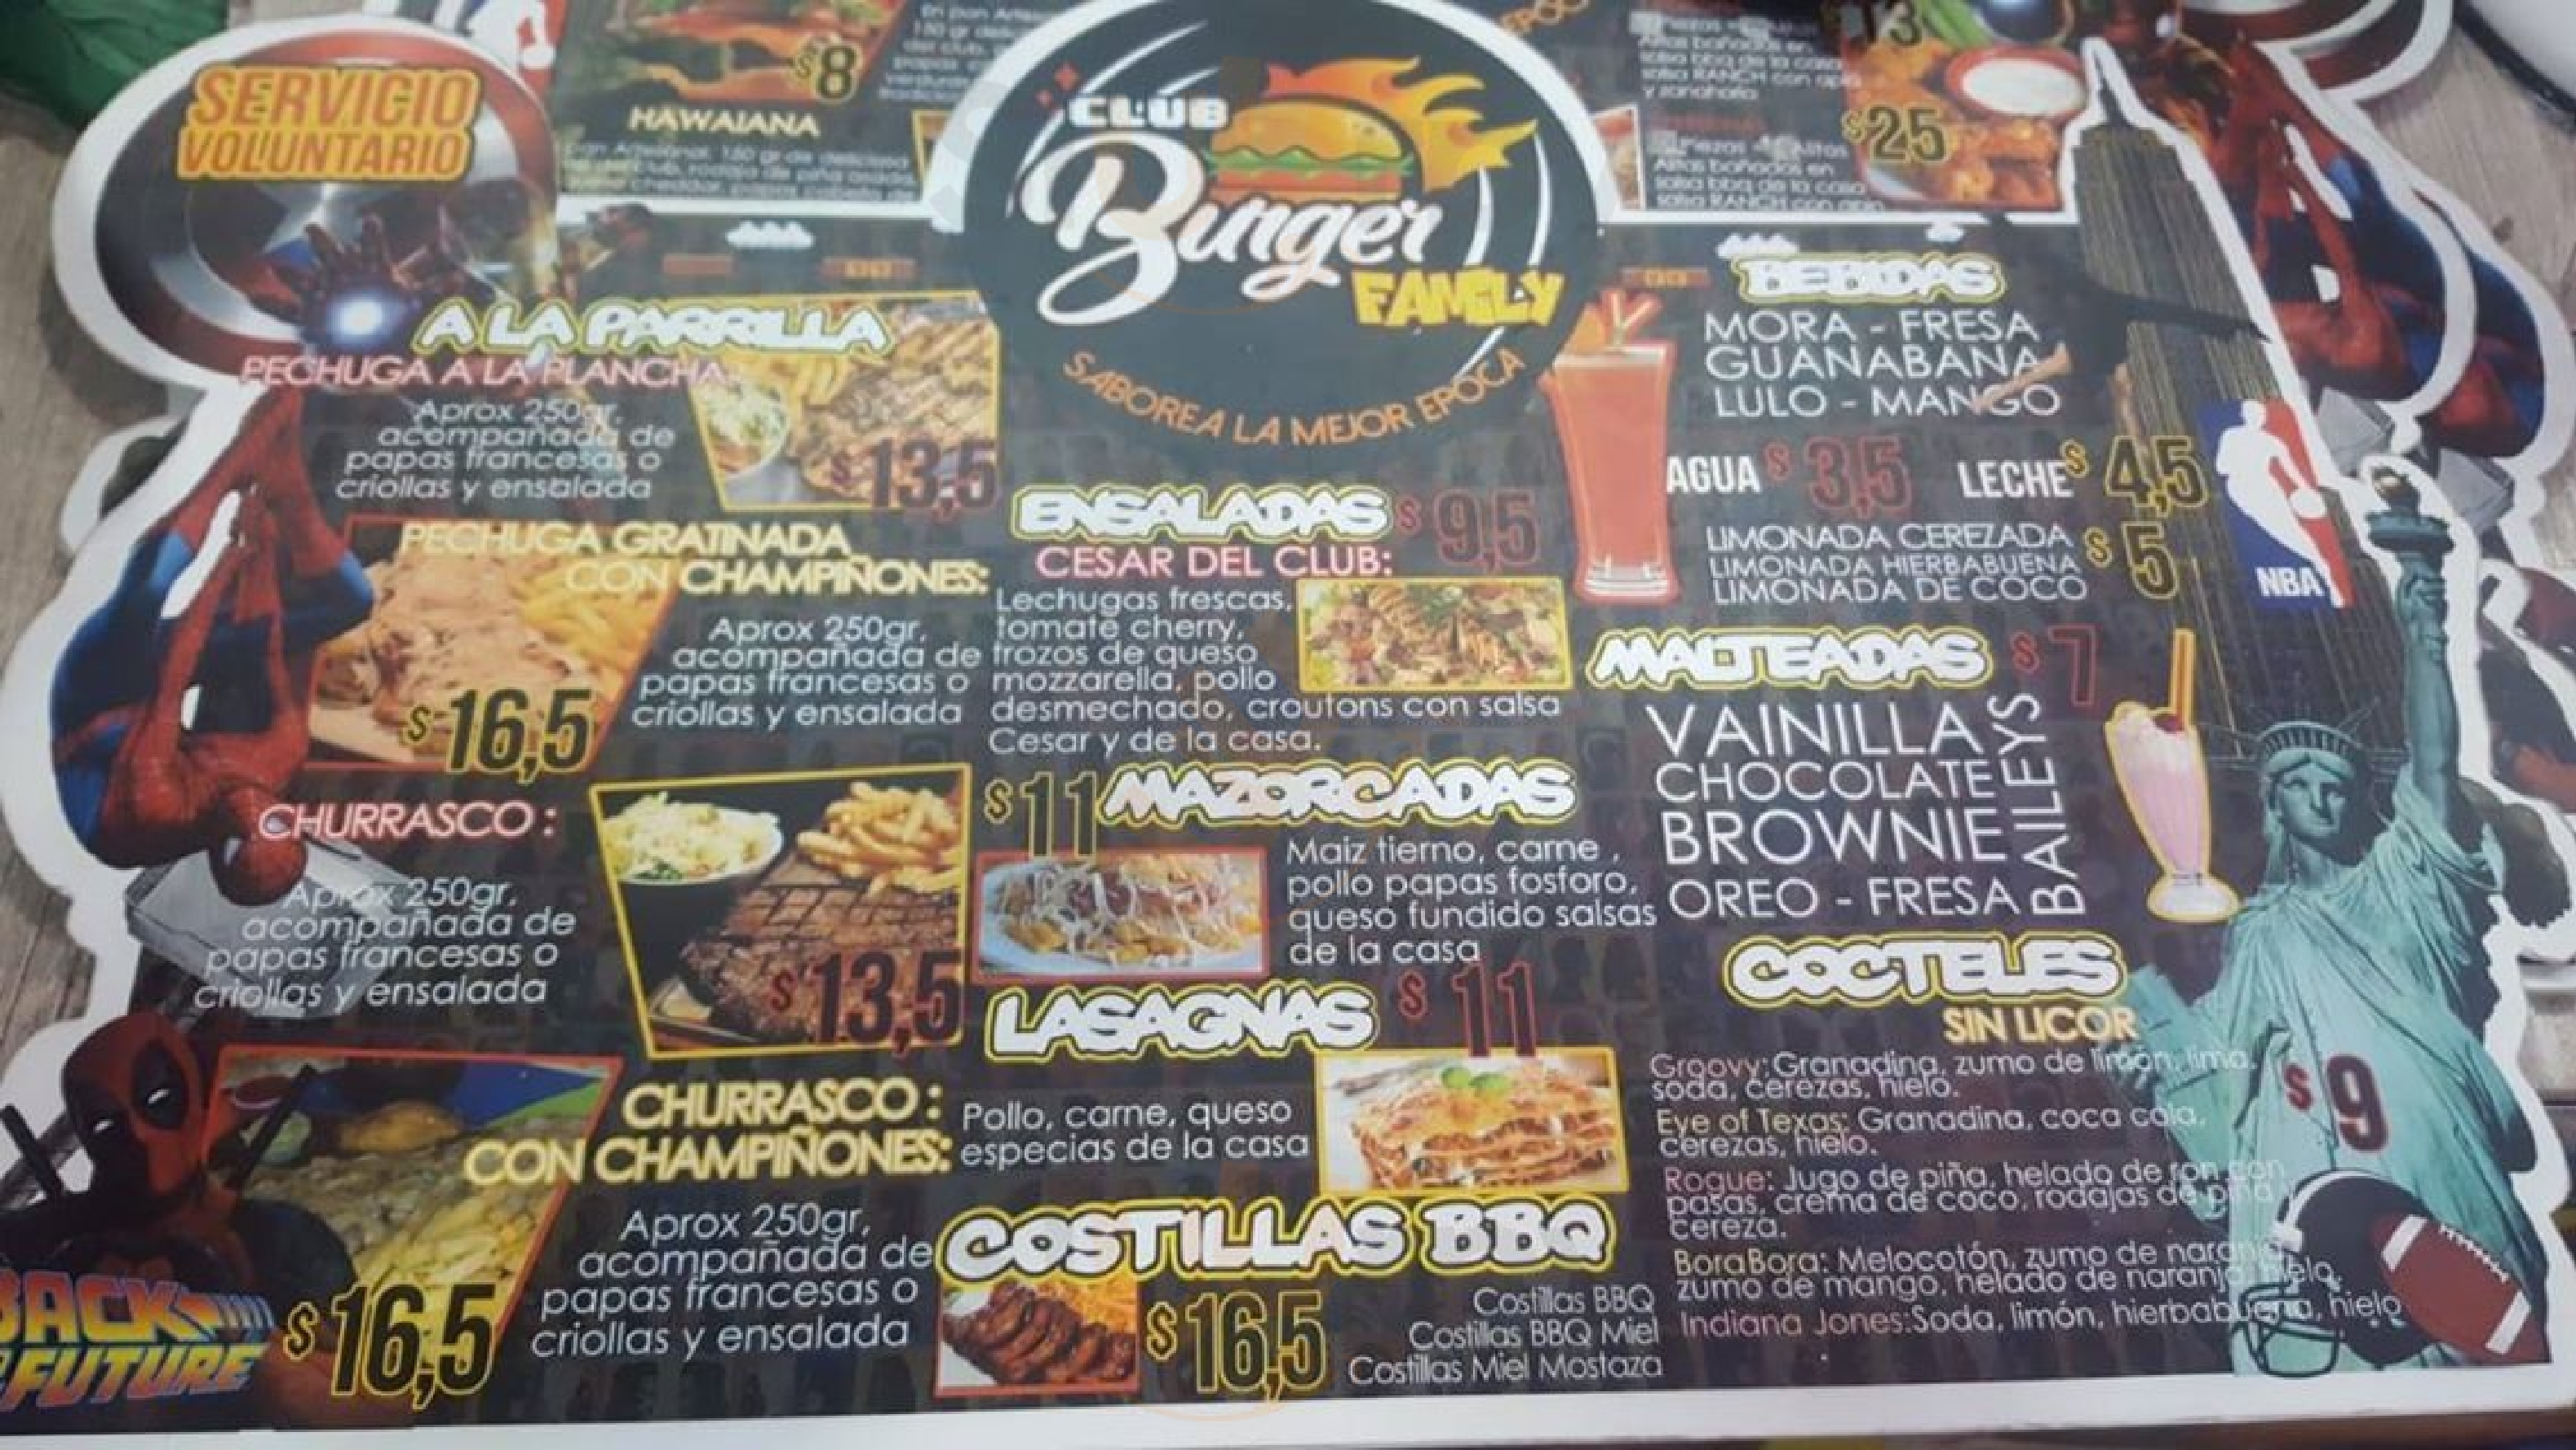 Club Burger Family Bogotá Menu - 1